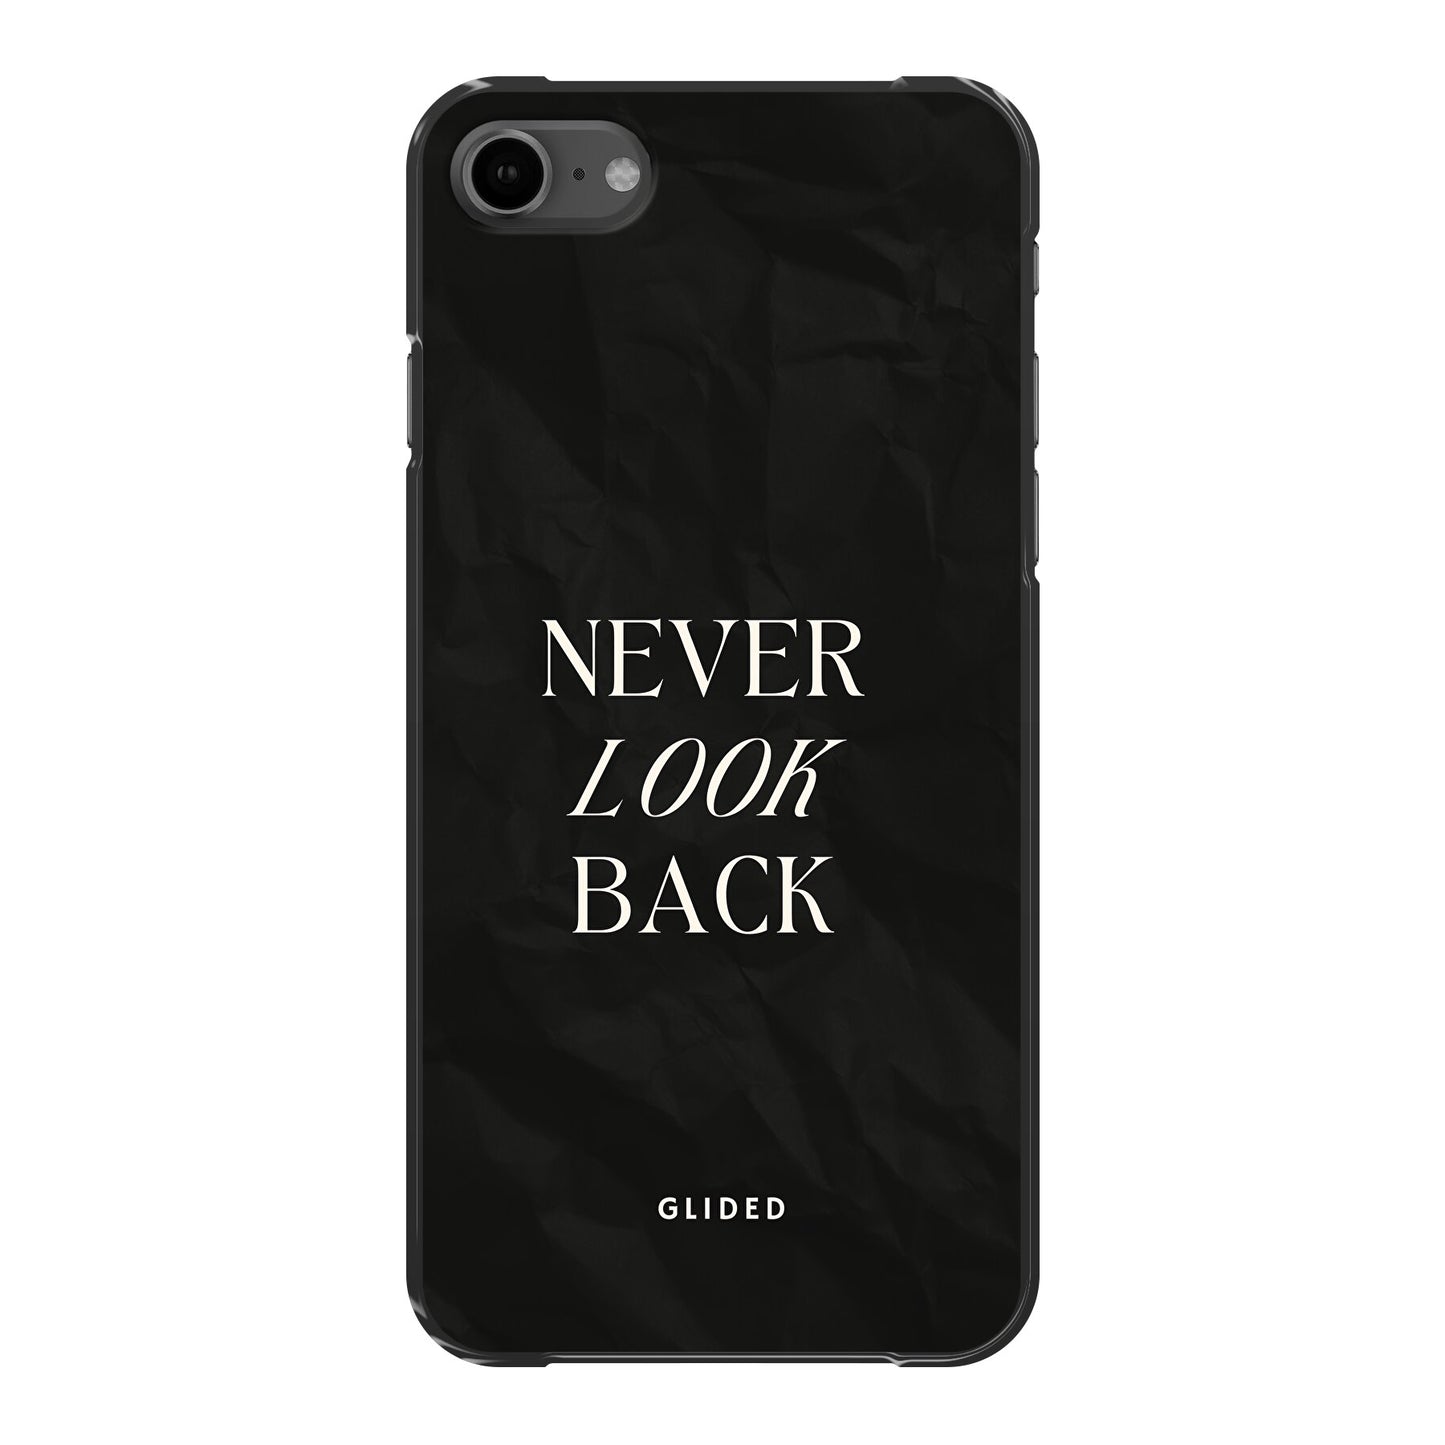 Never Back - iPhone 7 Handyhülle Hard Case